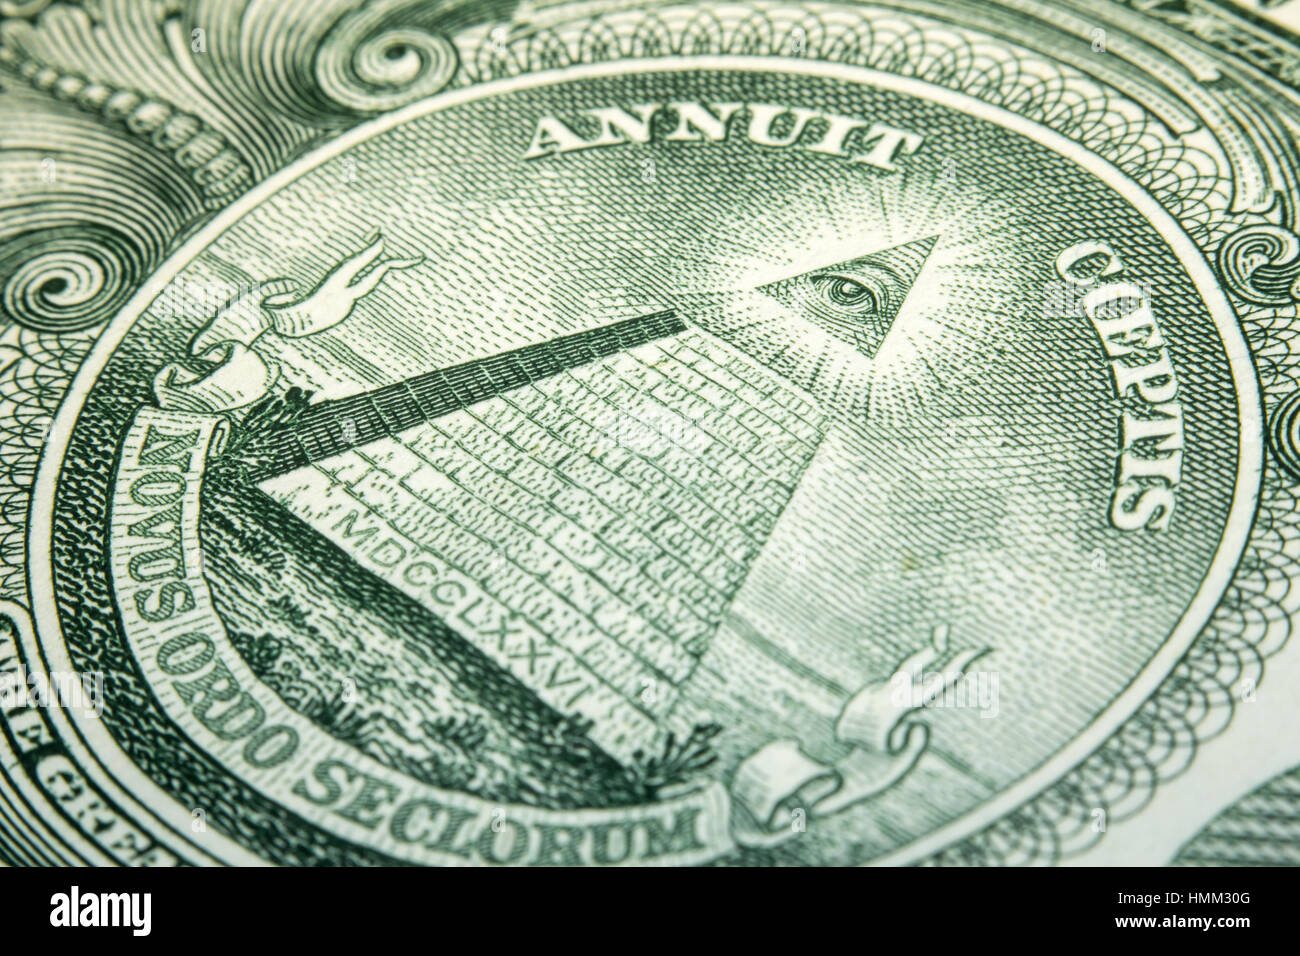 Macro closeup eye pyramid on back of dollar bill Stock Photo